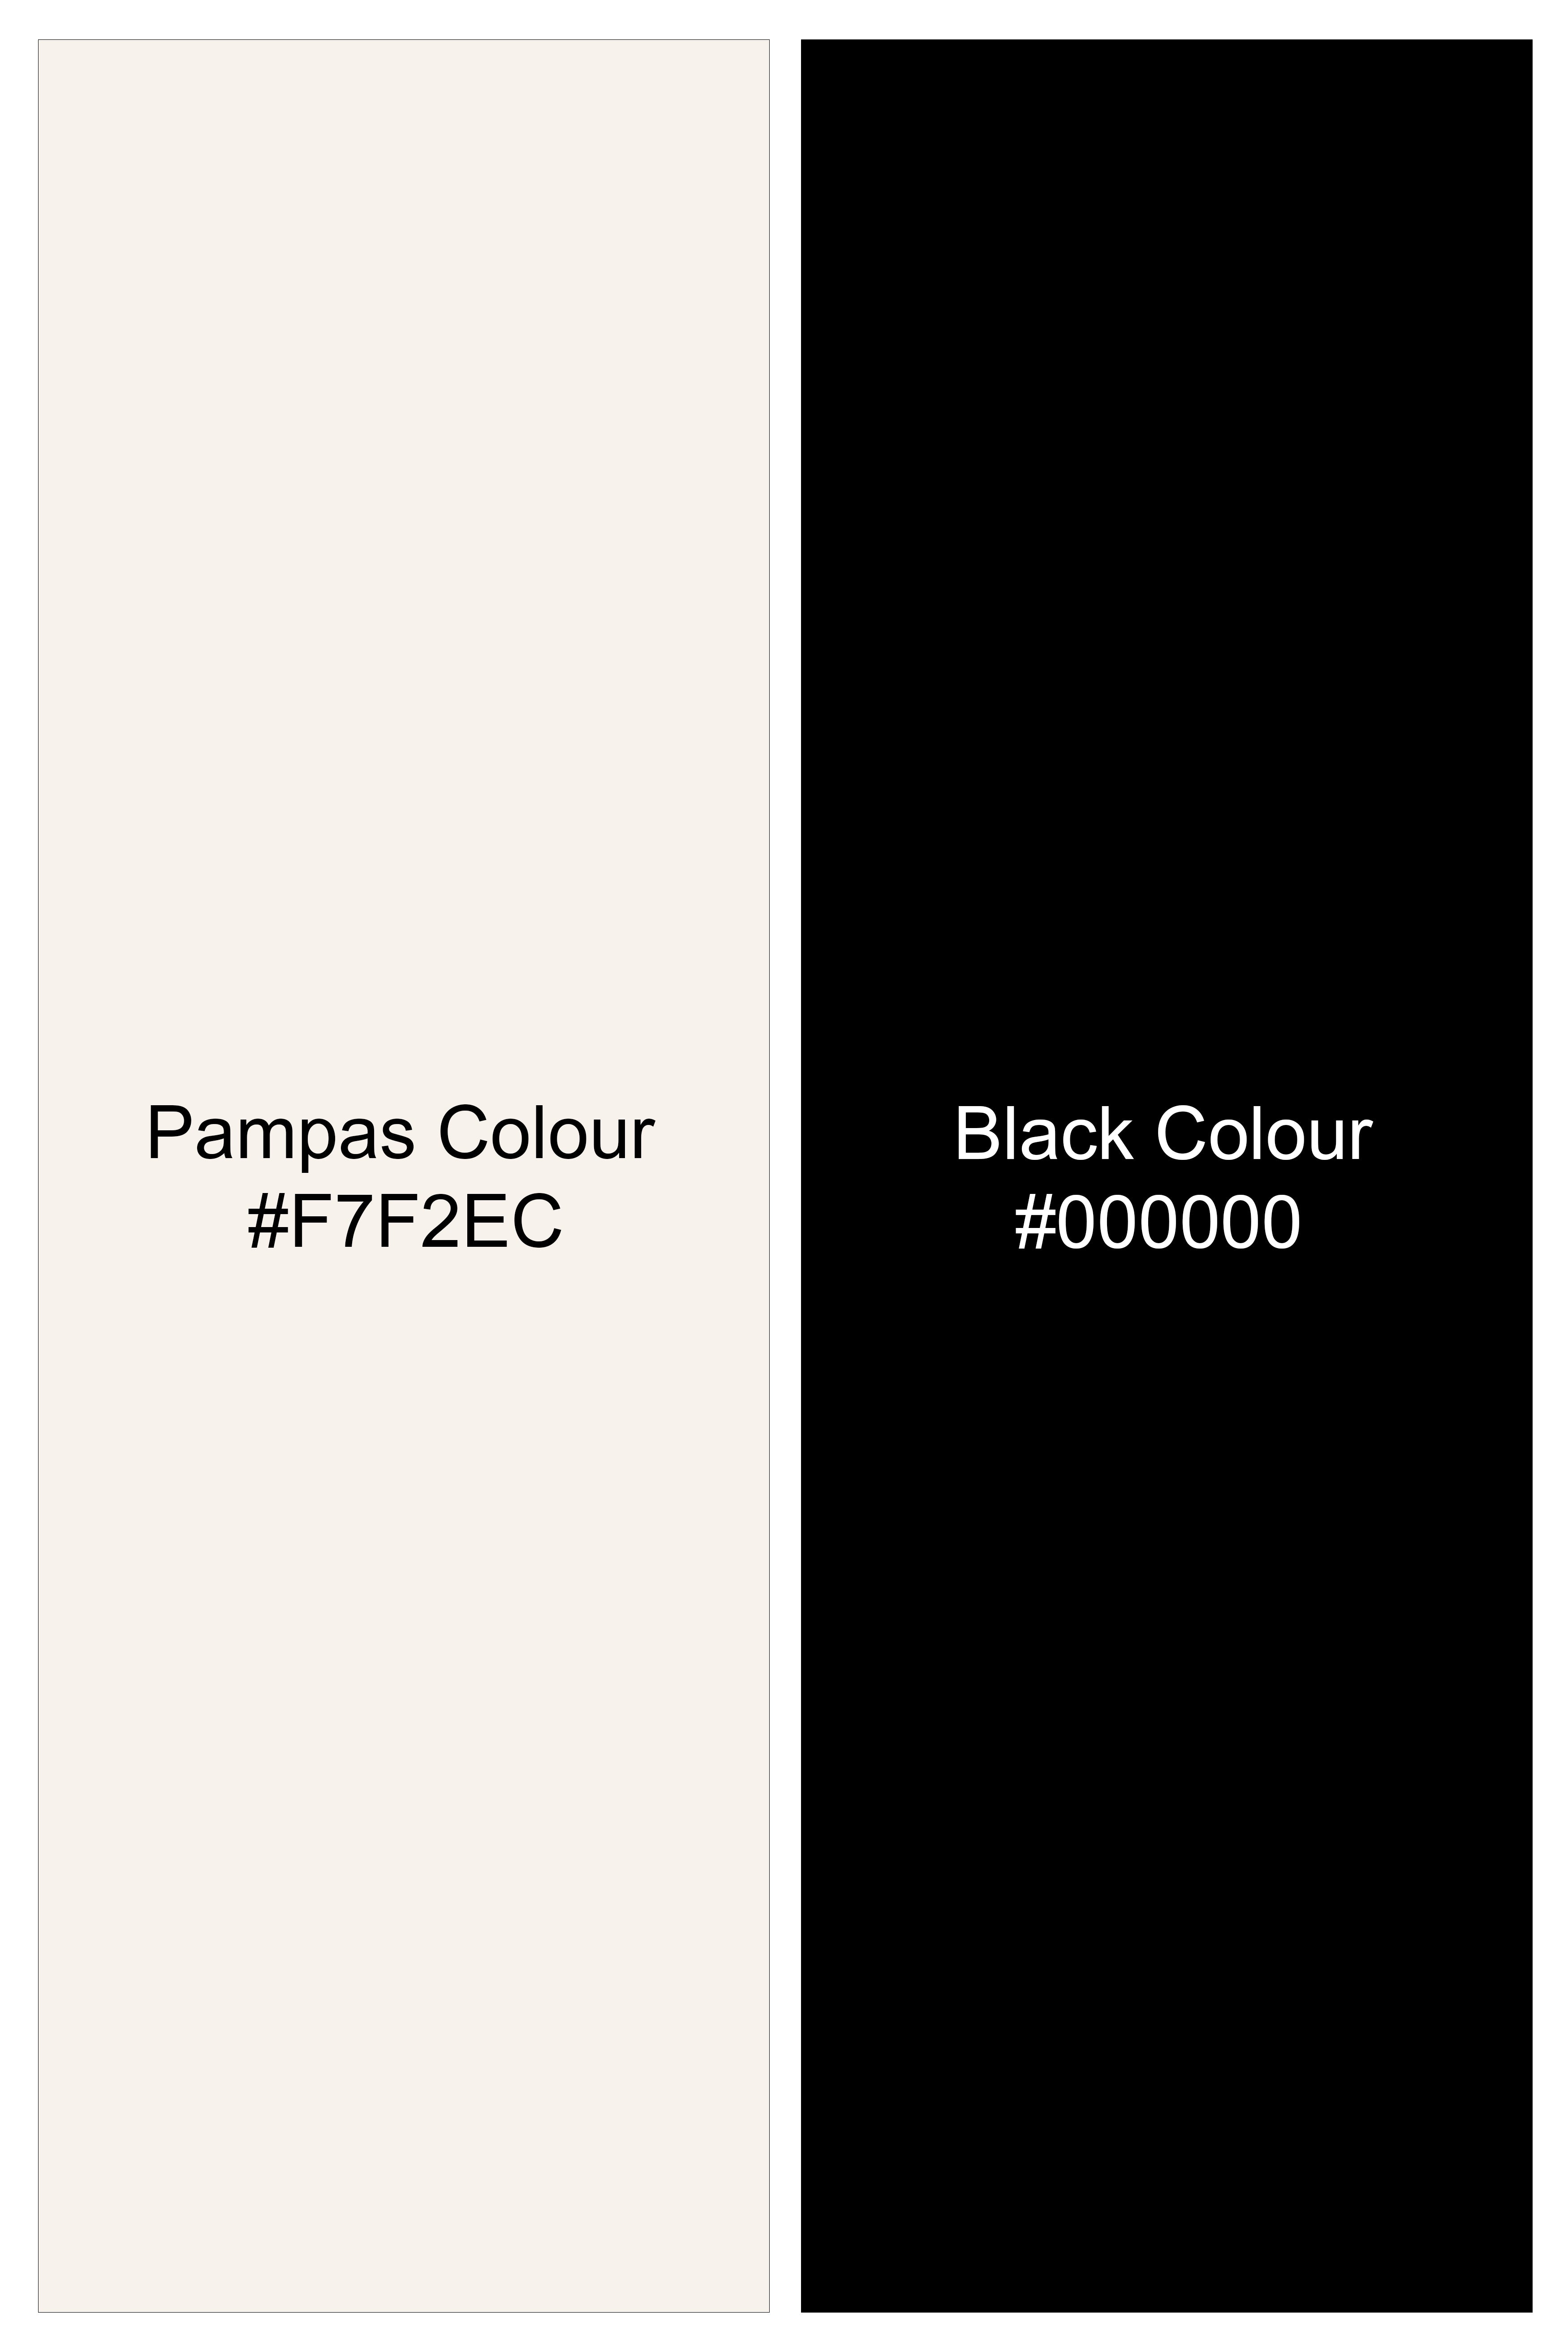 Pampas Off White and Black Premium Cotton T-Shirt TS917-S, TS917-M, TS917-L, TS917-XL, TS917-XXL